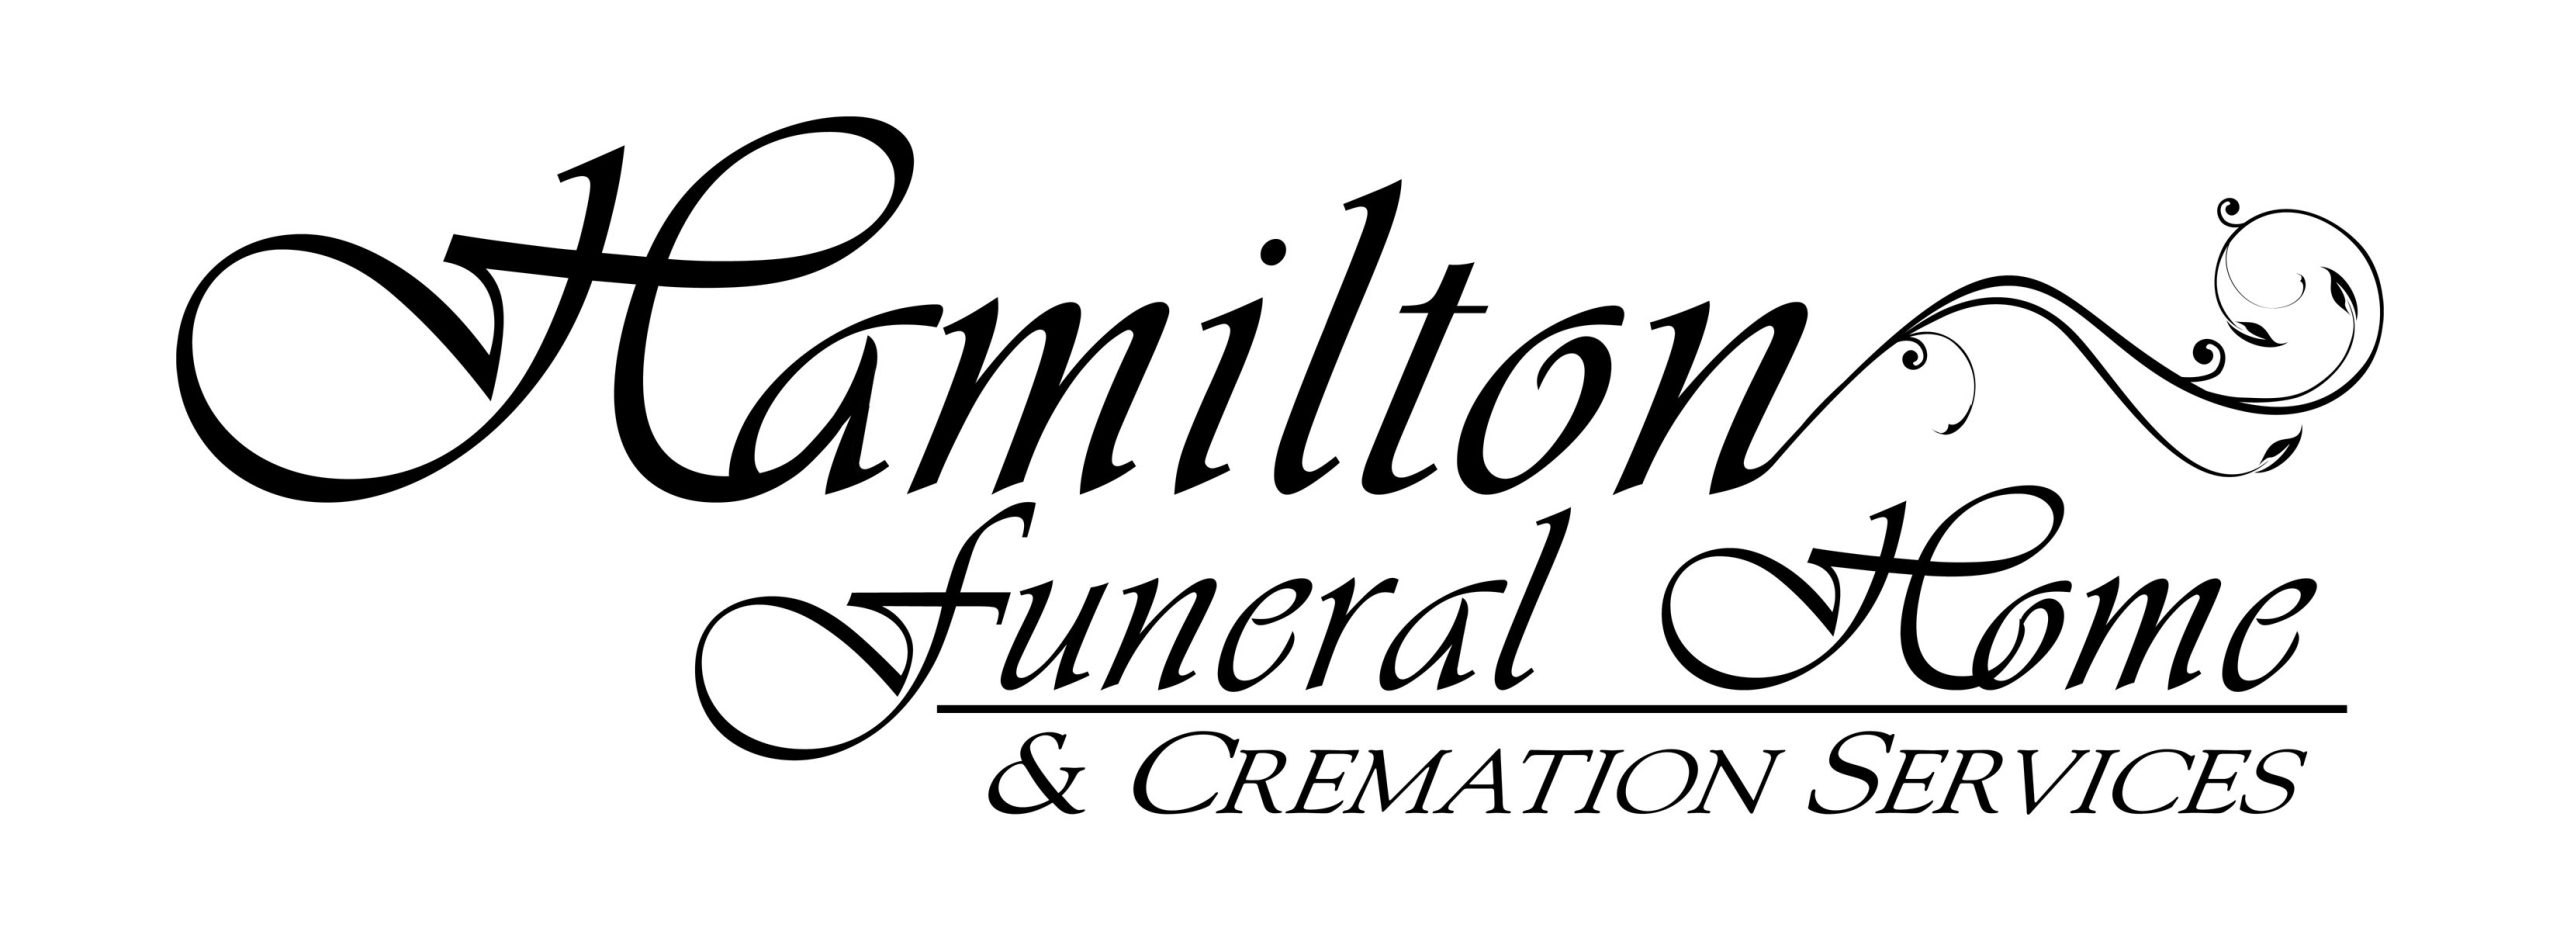 hamilton funeral home chattanooga tn